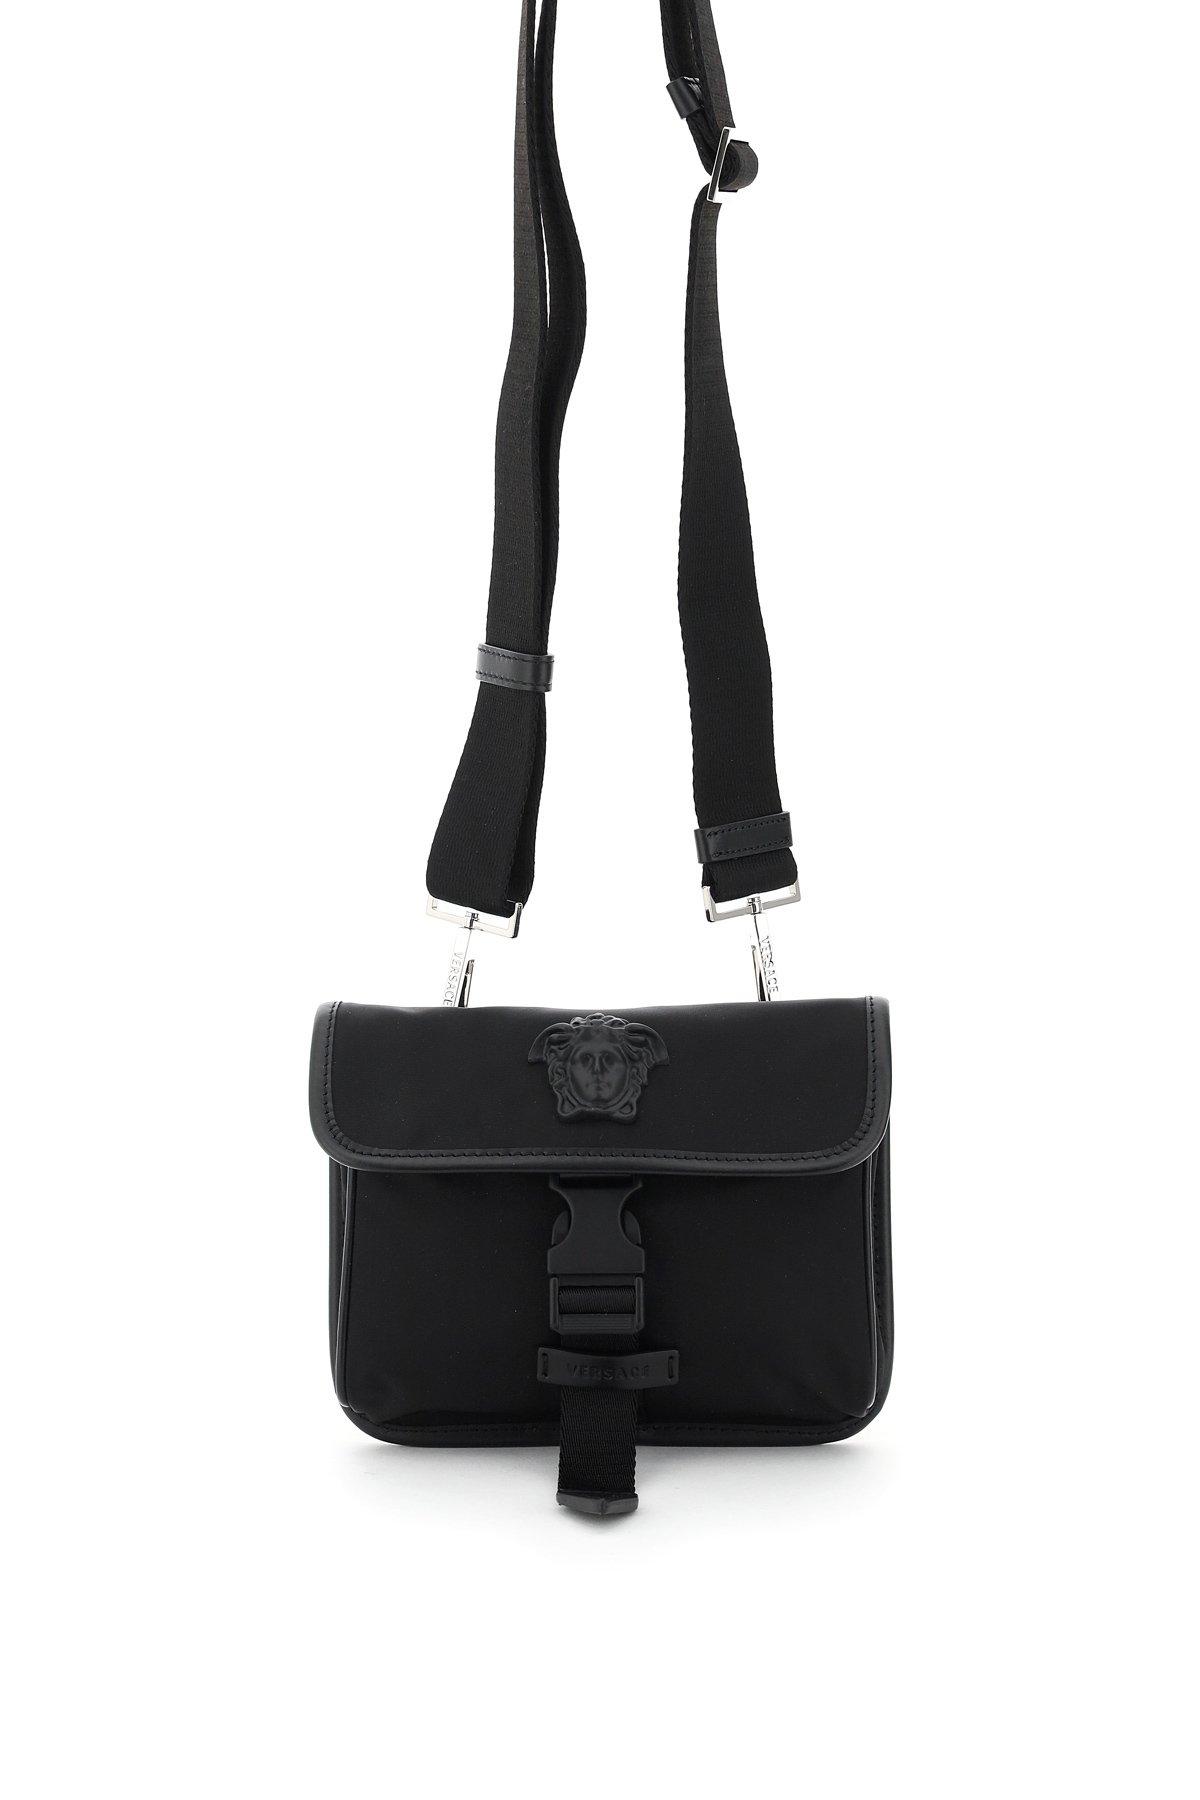 Versace Messenger Bag La Medusa Os Synthetic in Black for Men - Lyst